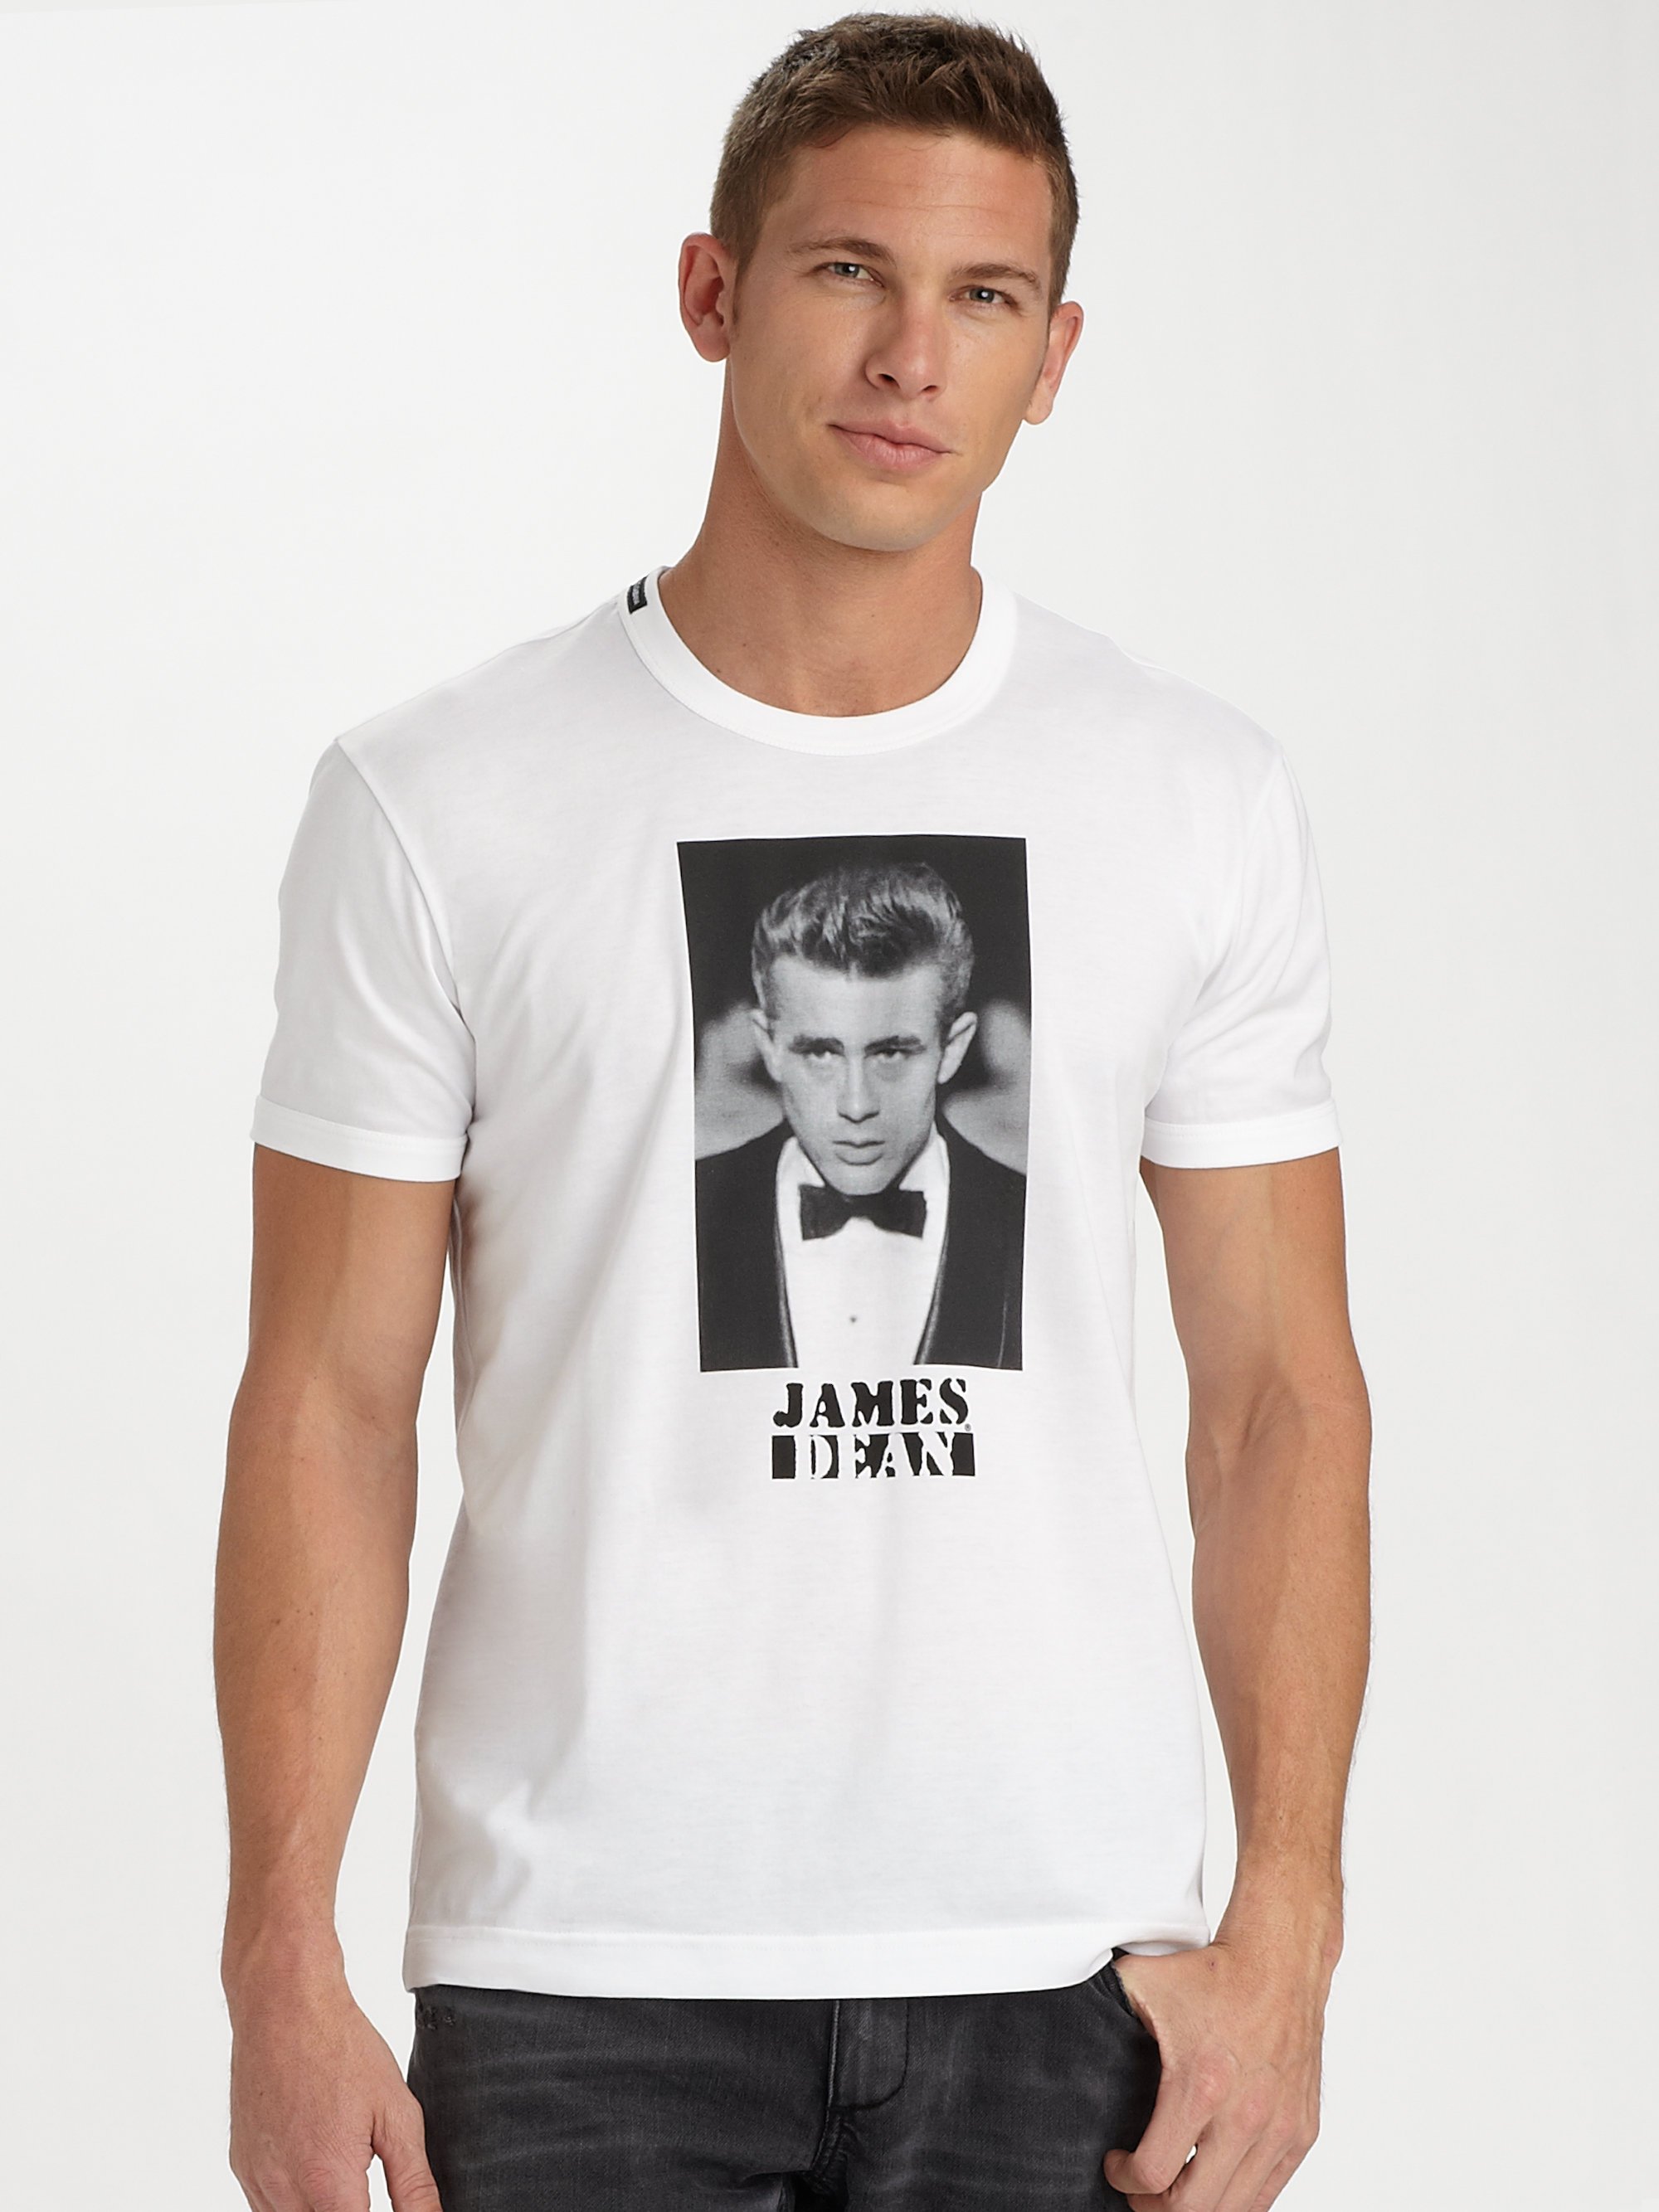 Dolce & Gabbana James Dean Tee in White for Men - Lyst